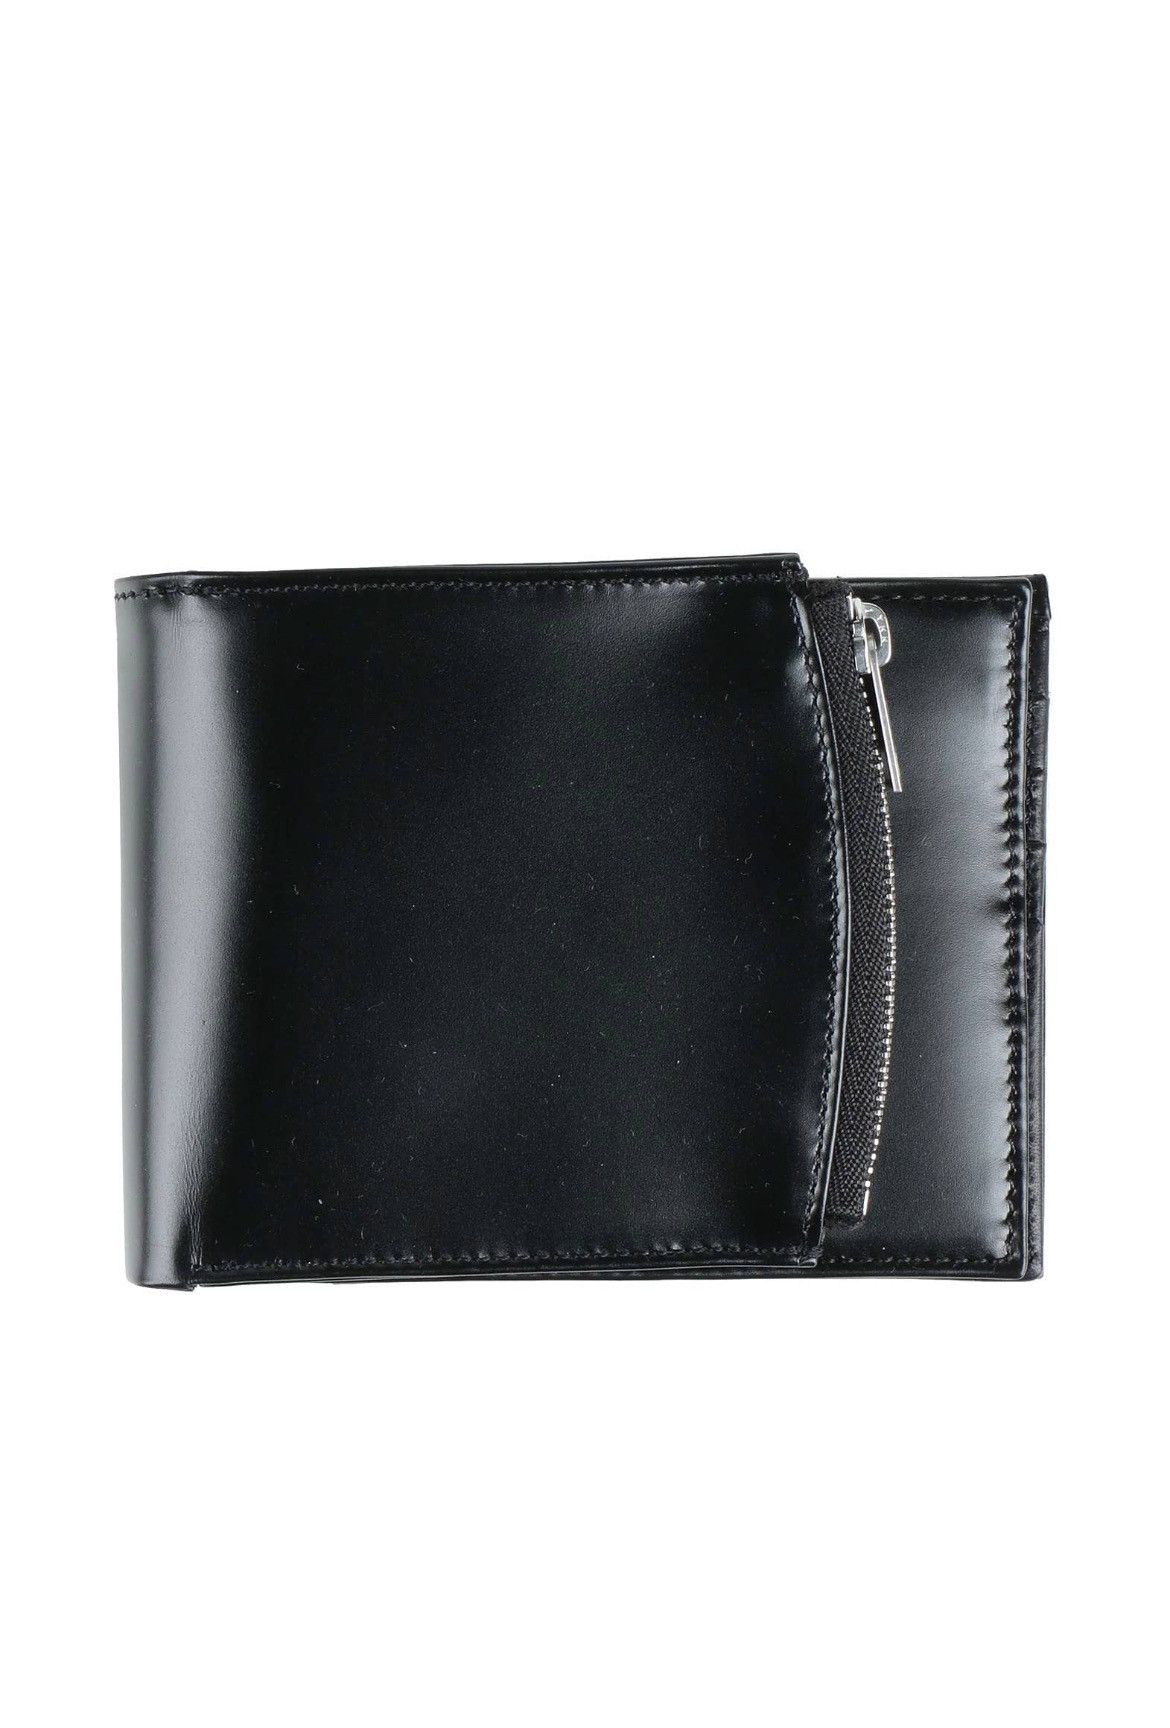 Maison Margiela Maison Margiela calf leather four stitches wallet coin purse  | Grailed